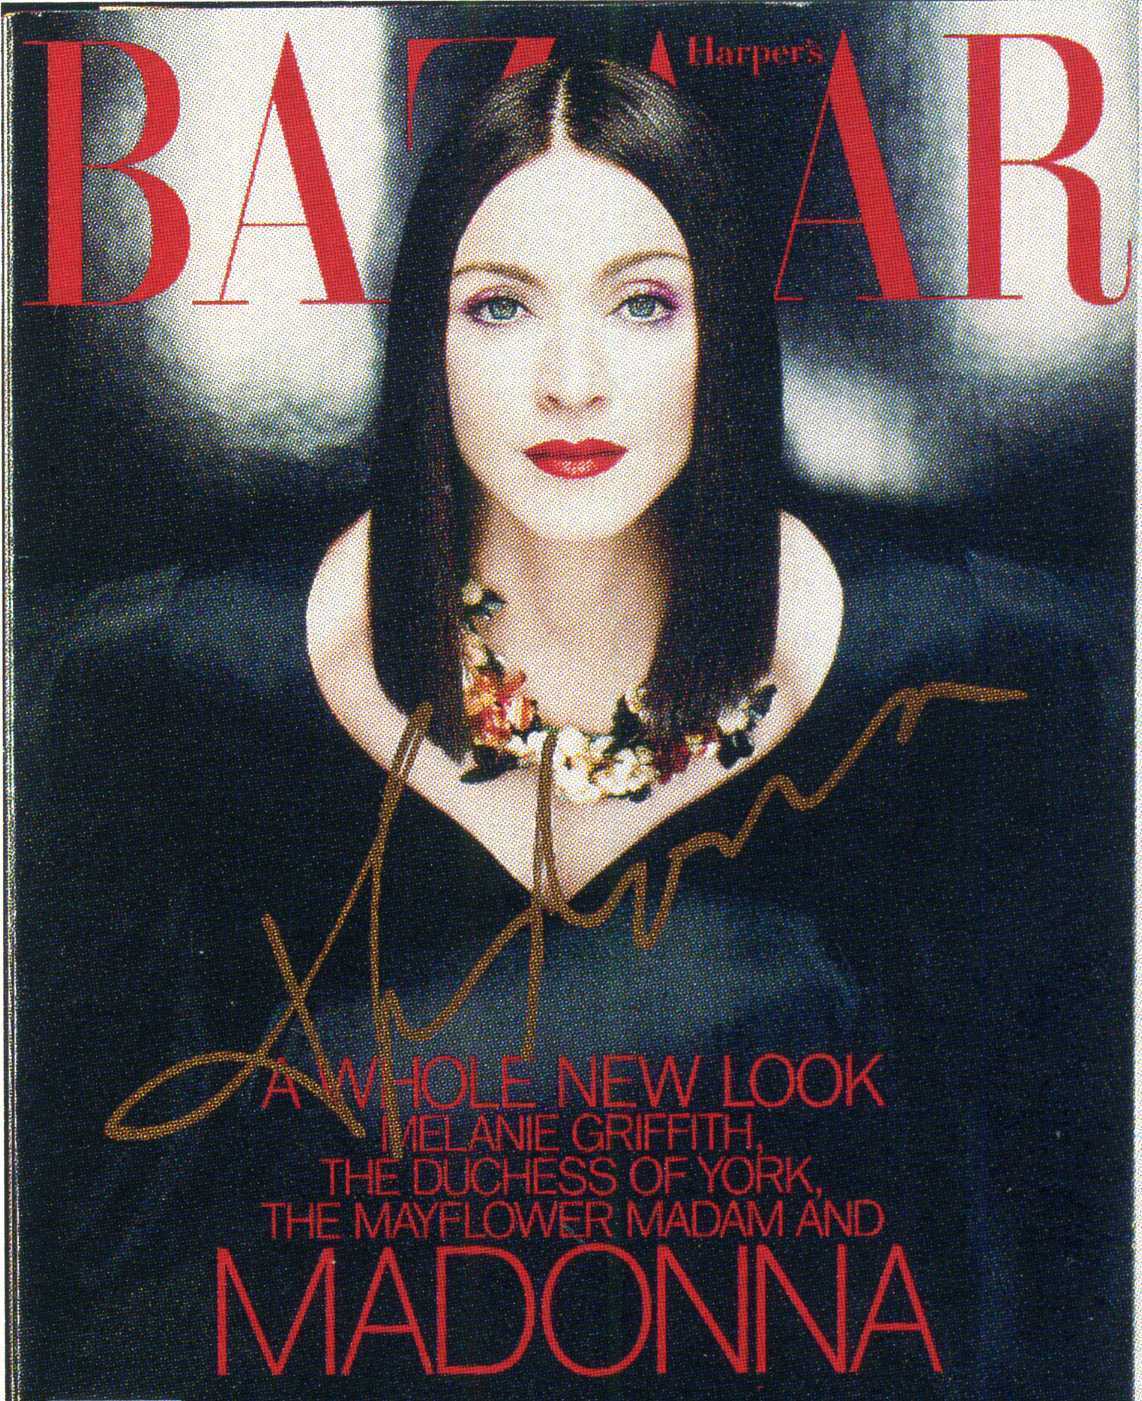 MADONNA Signed 'Bazaar' Photo Poster paintinggraph - Rock / Pop Singer / Vocalist - preprint